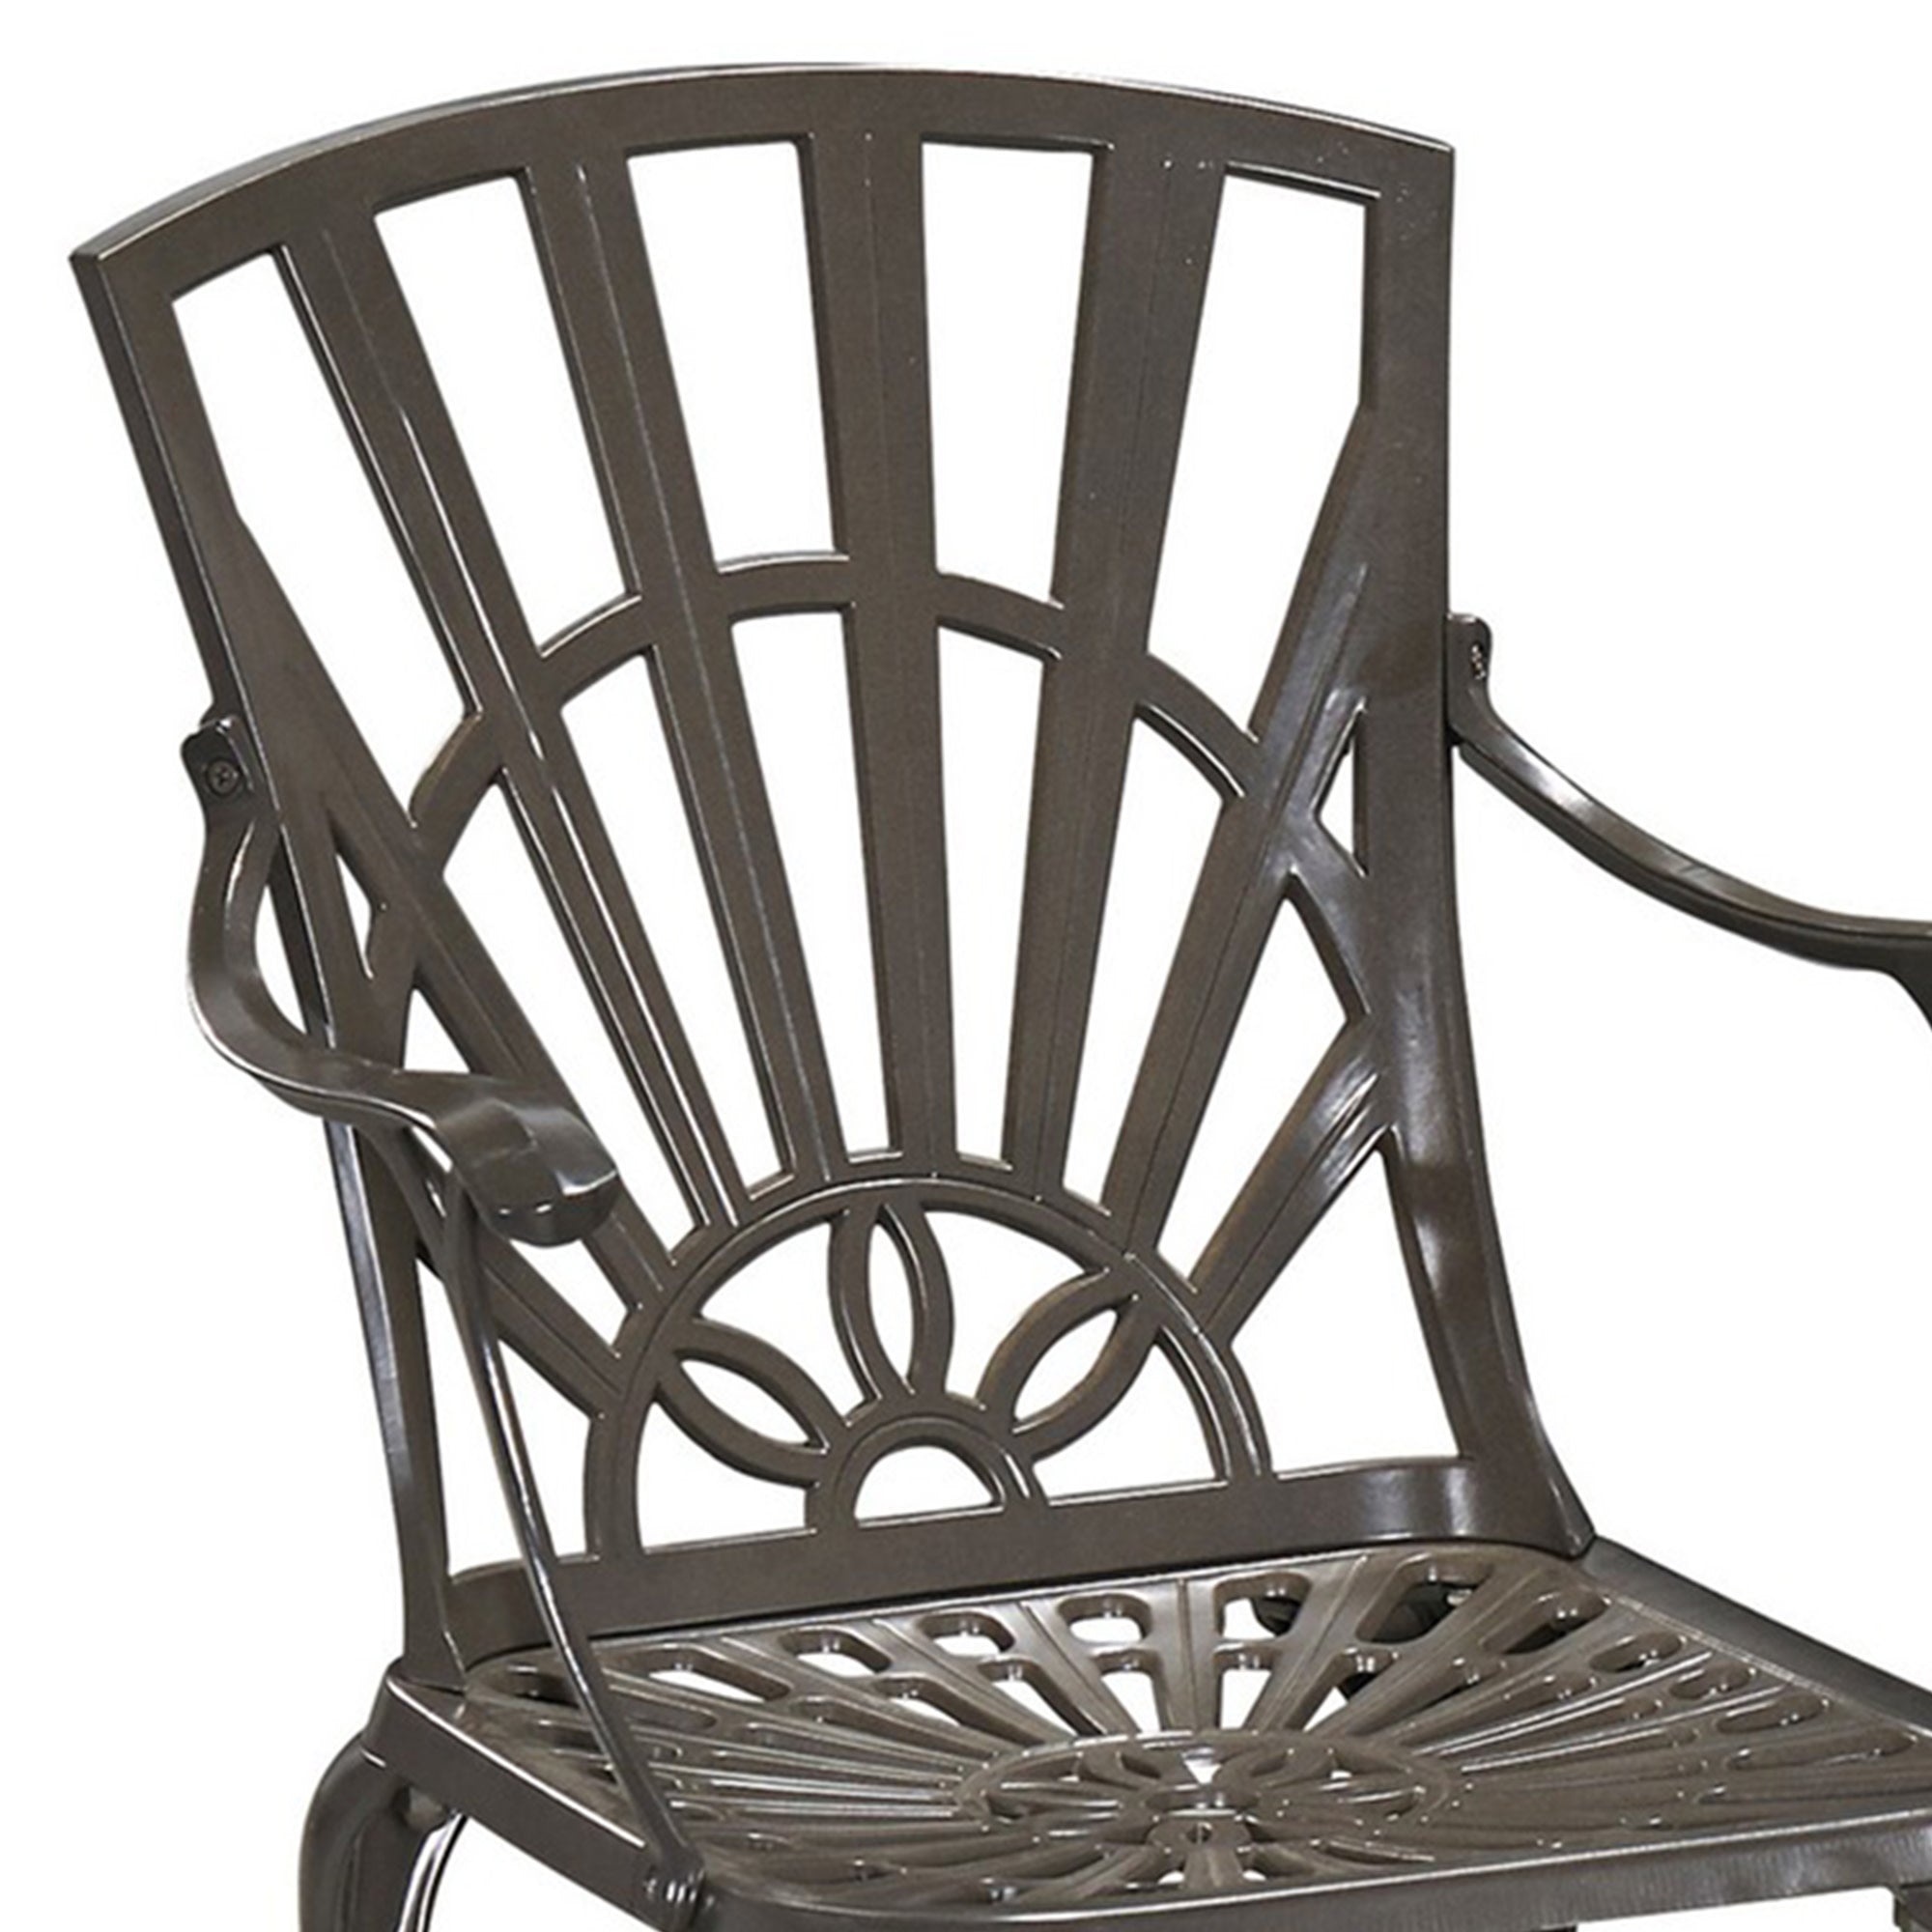 Grenada Outdoor Chair Pair by Homestyles - Khaki Gray - Aluminum - 6661-80